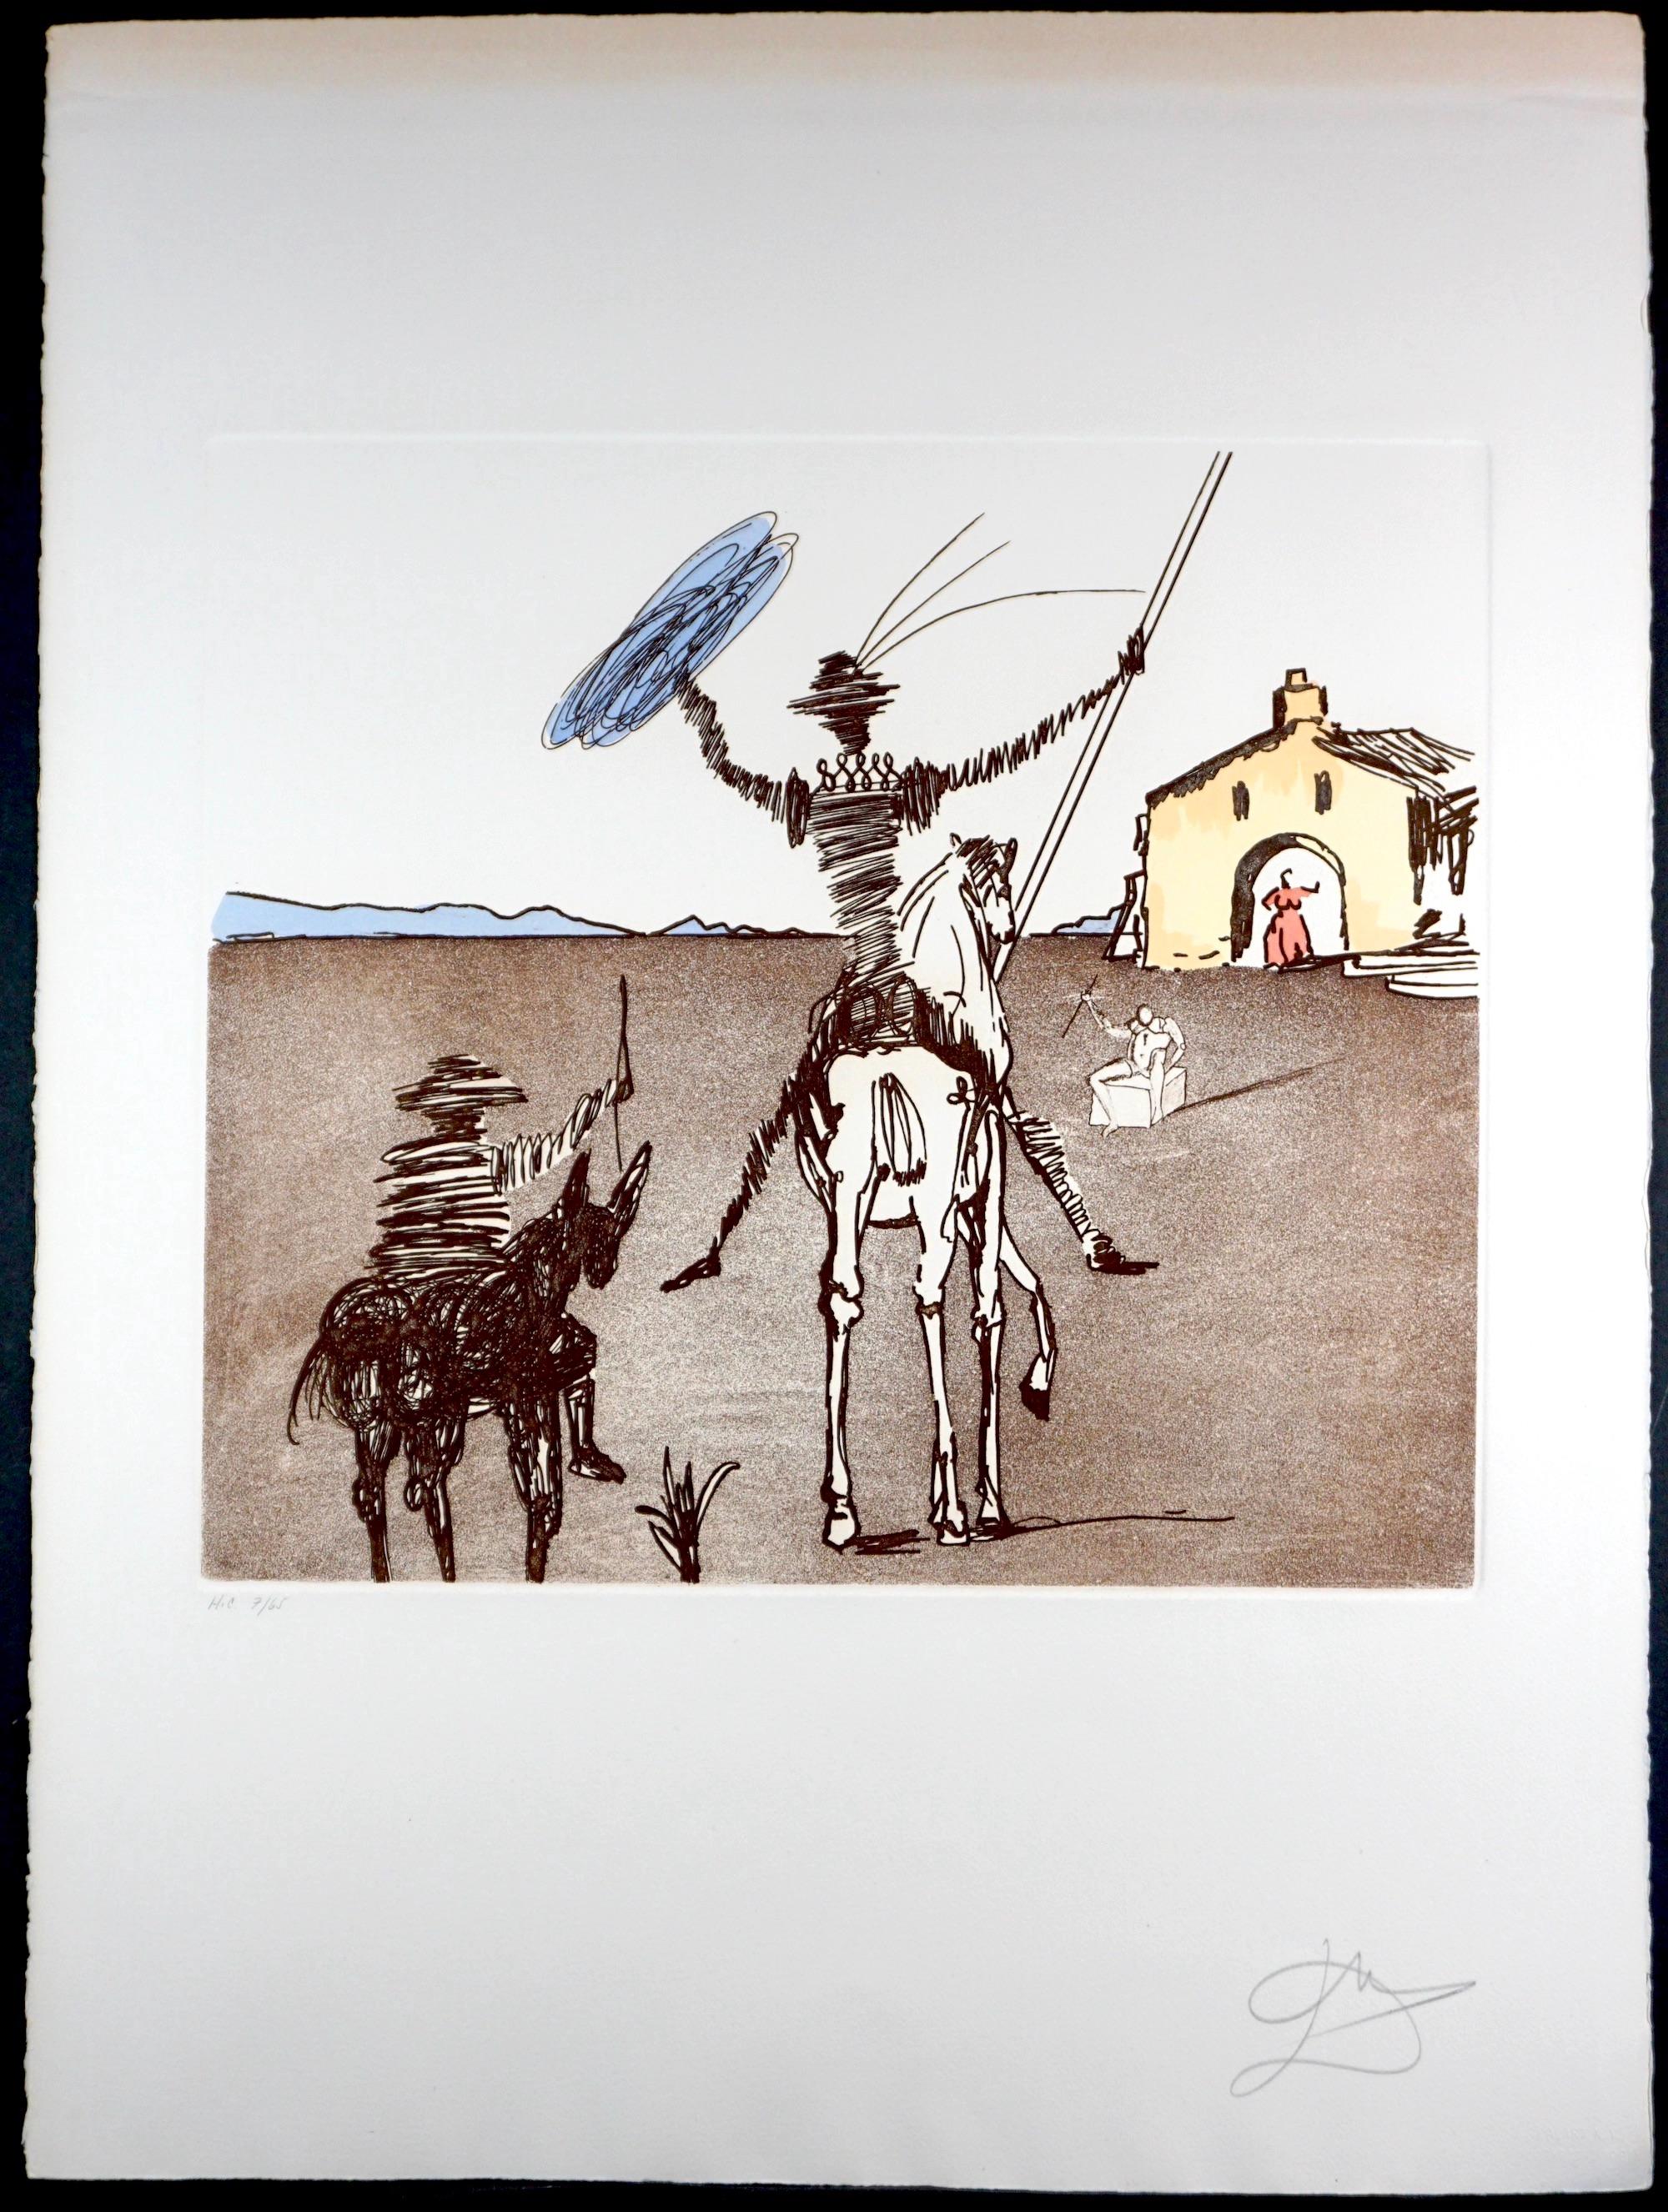 Historia de Don Quichotte de la Mancha The Impossible Dream  - Print by Salvador Dalí